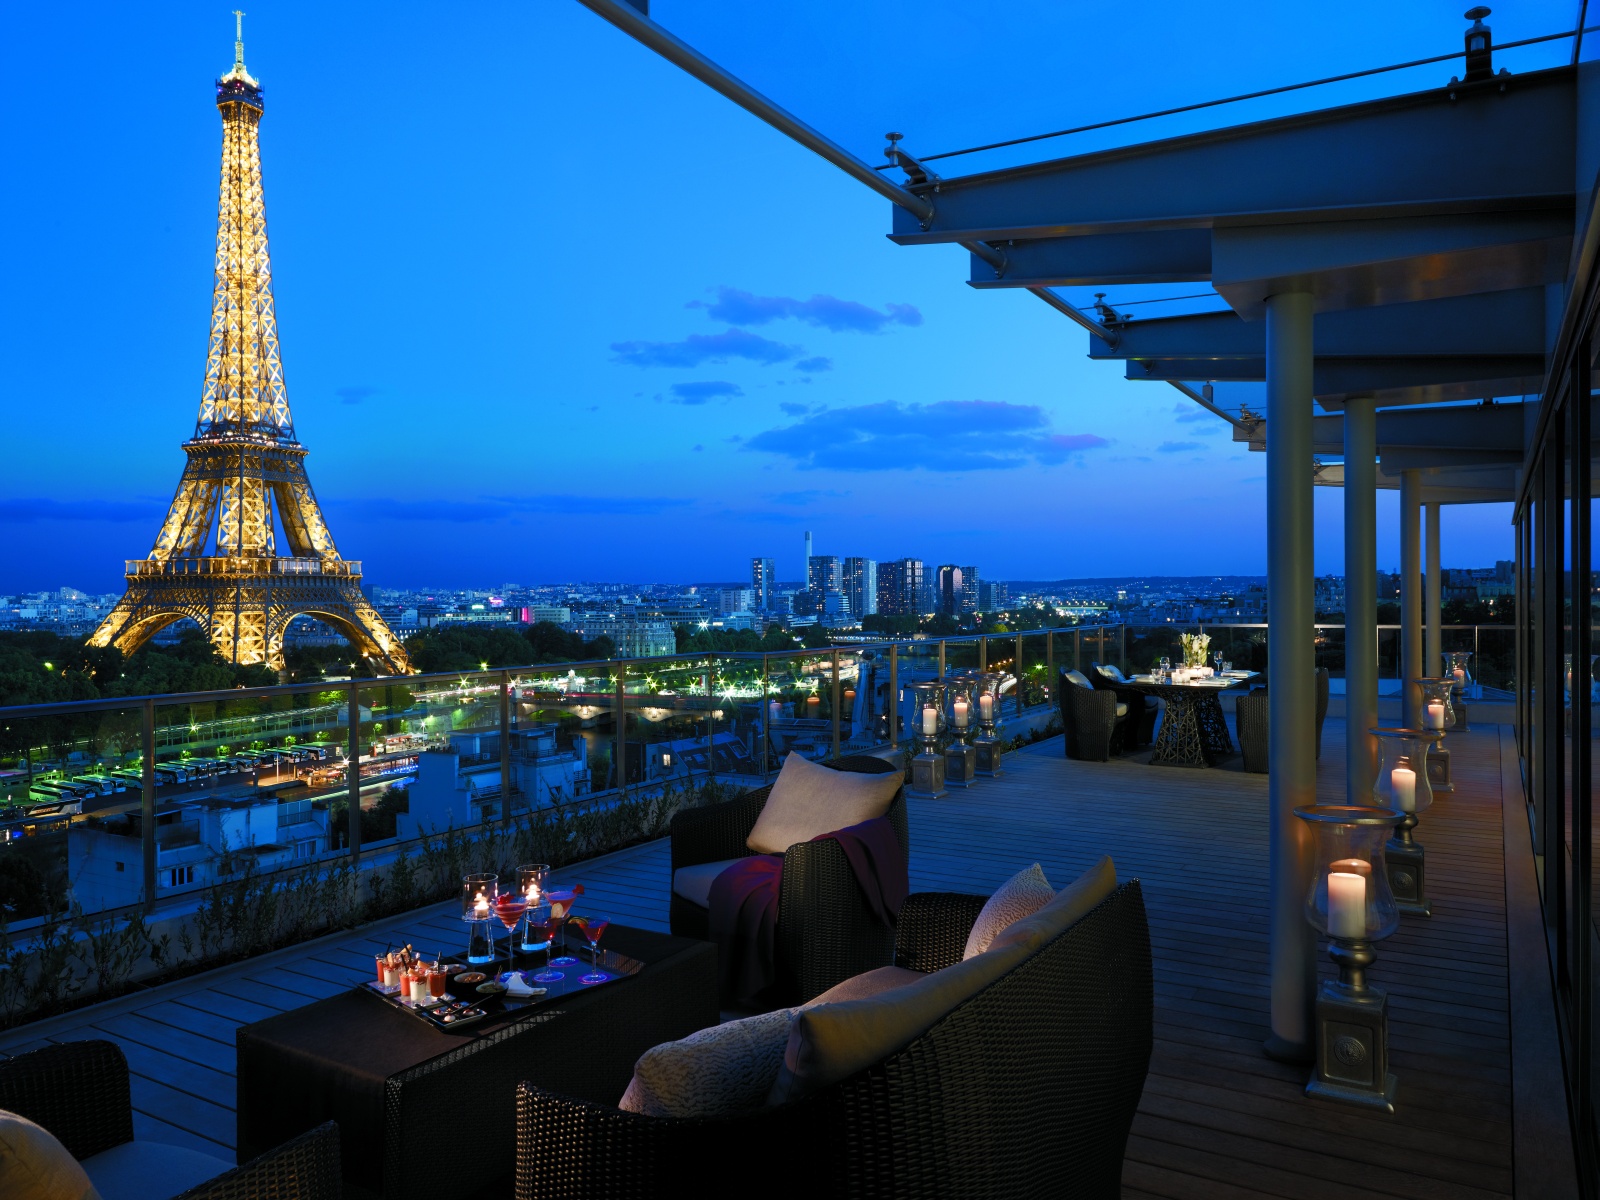 Shangri-La Hotel Paris - Parisian Luxury In The Shadow Of The Eiffel Tower